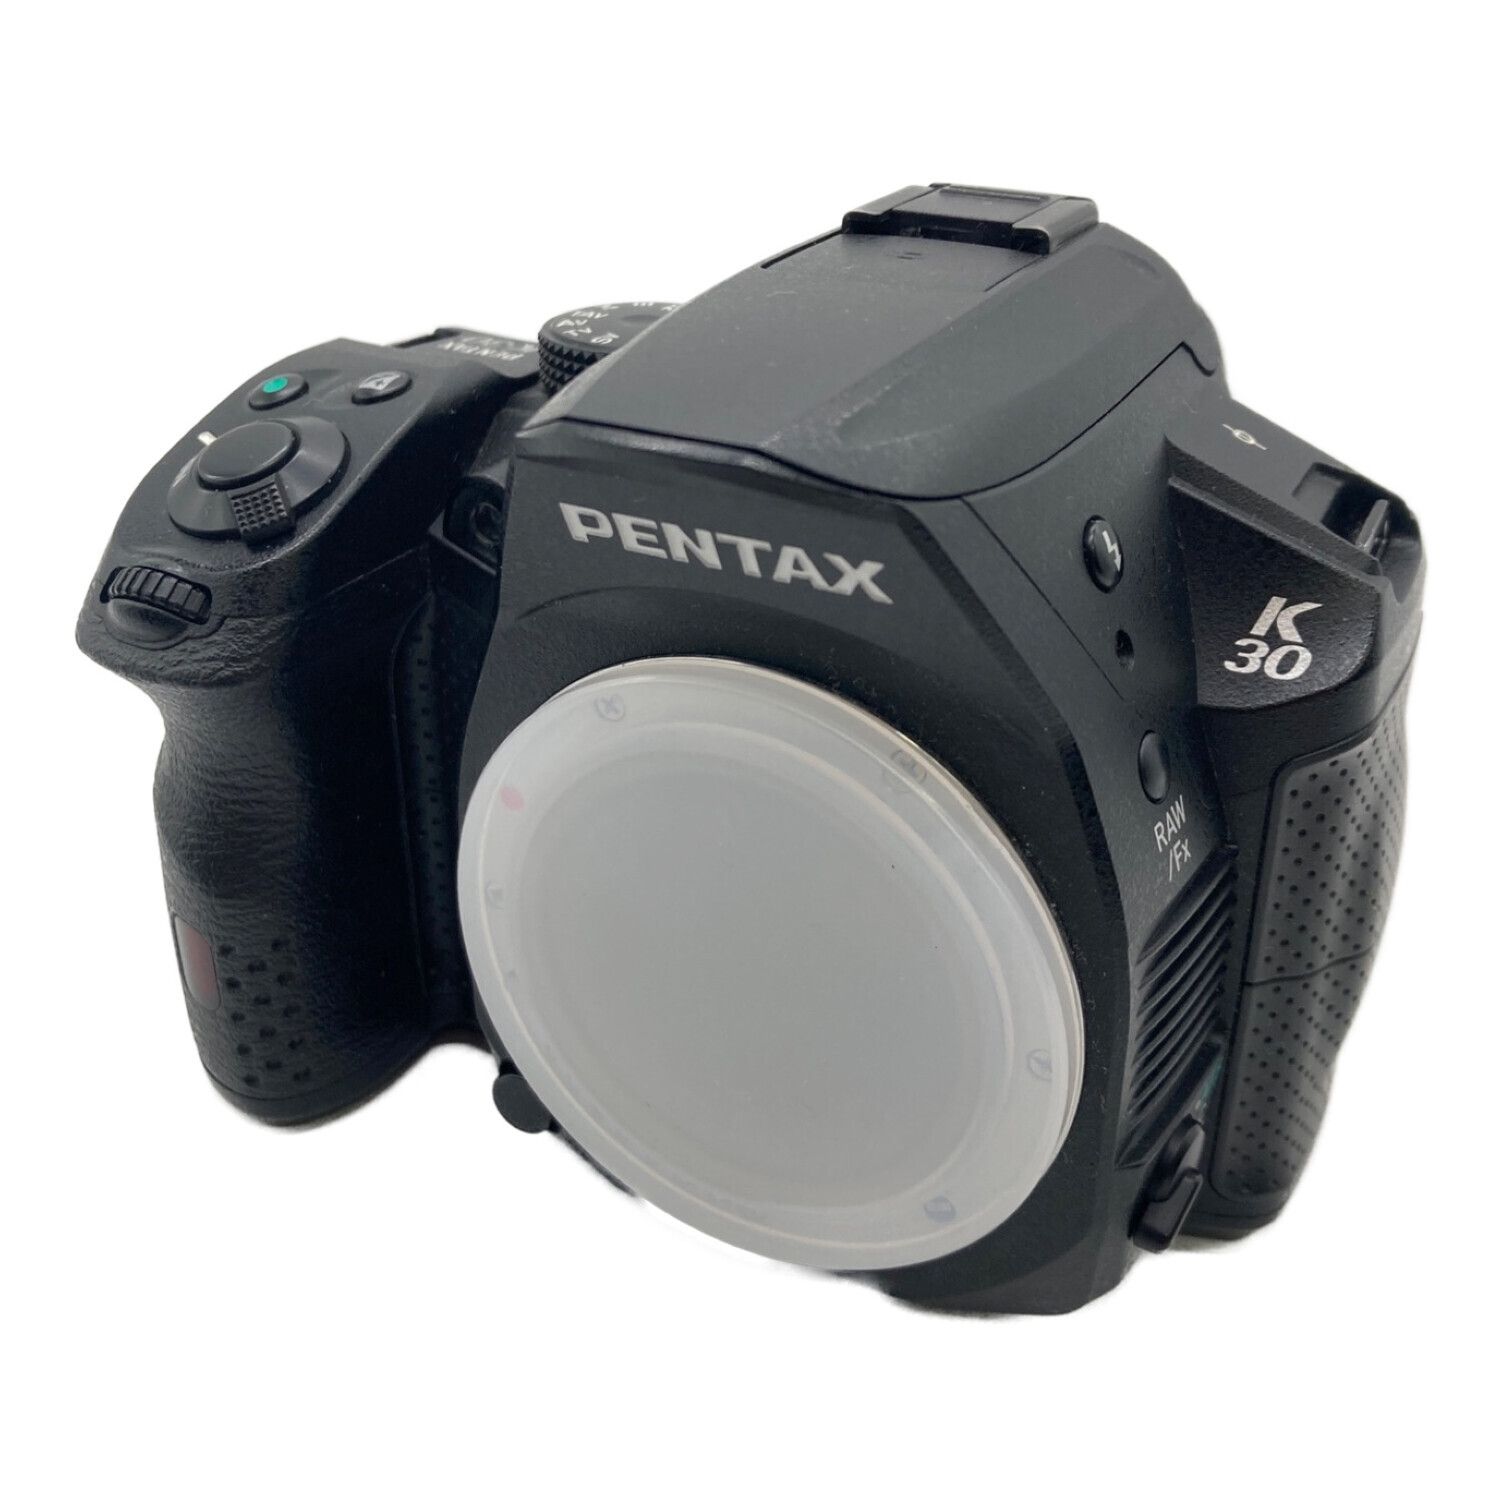 PENTAX (ペンタックス) 一眼レフカメラ K-30 1649万画素(総画素) 1628 